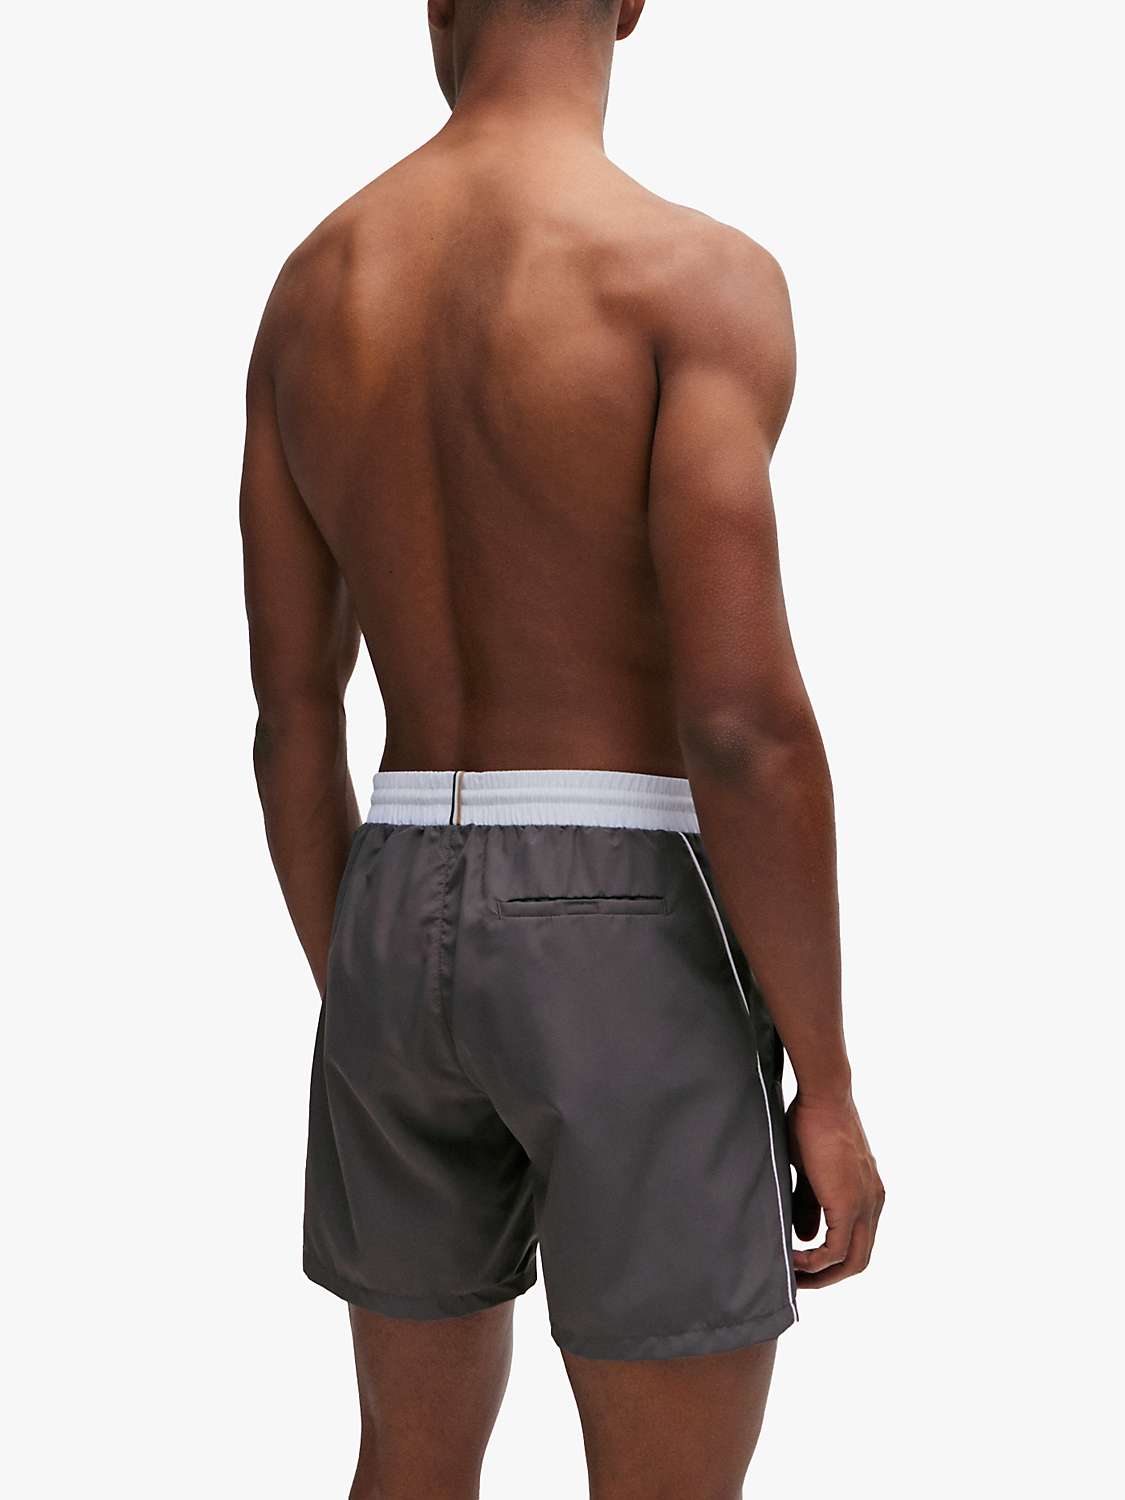 Buy BOSS Starfish Swim Shorts, Grey Online at johnlewis.com